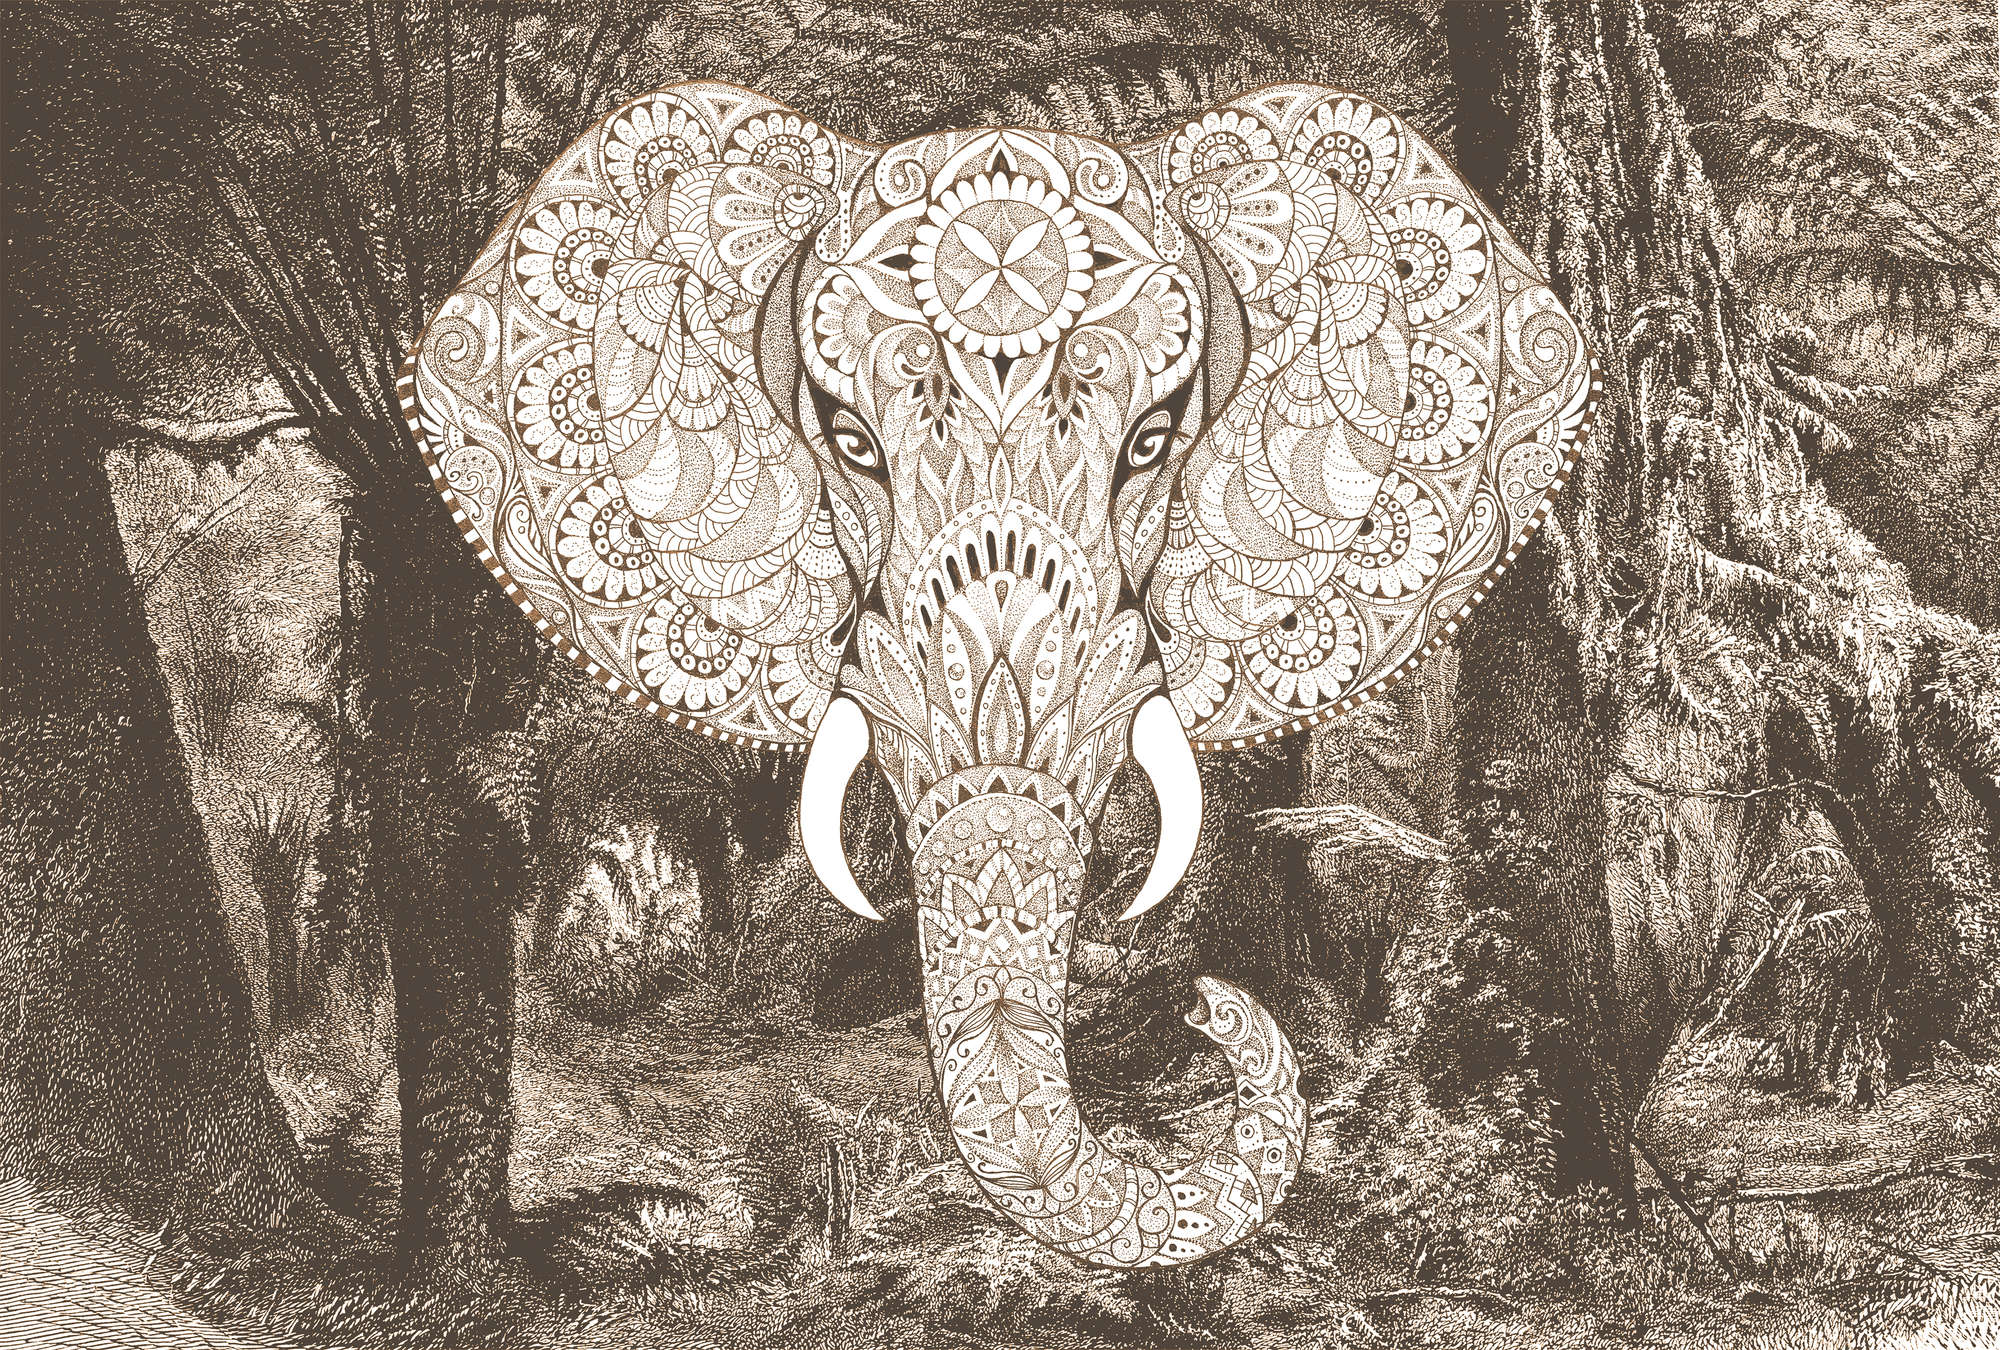             Photo wallpaper elephant in boho style, jungle motif in sepia - beige, grey, white
        